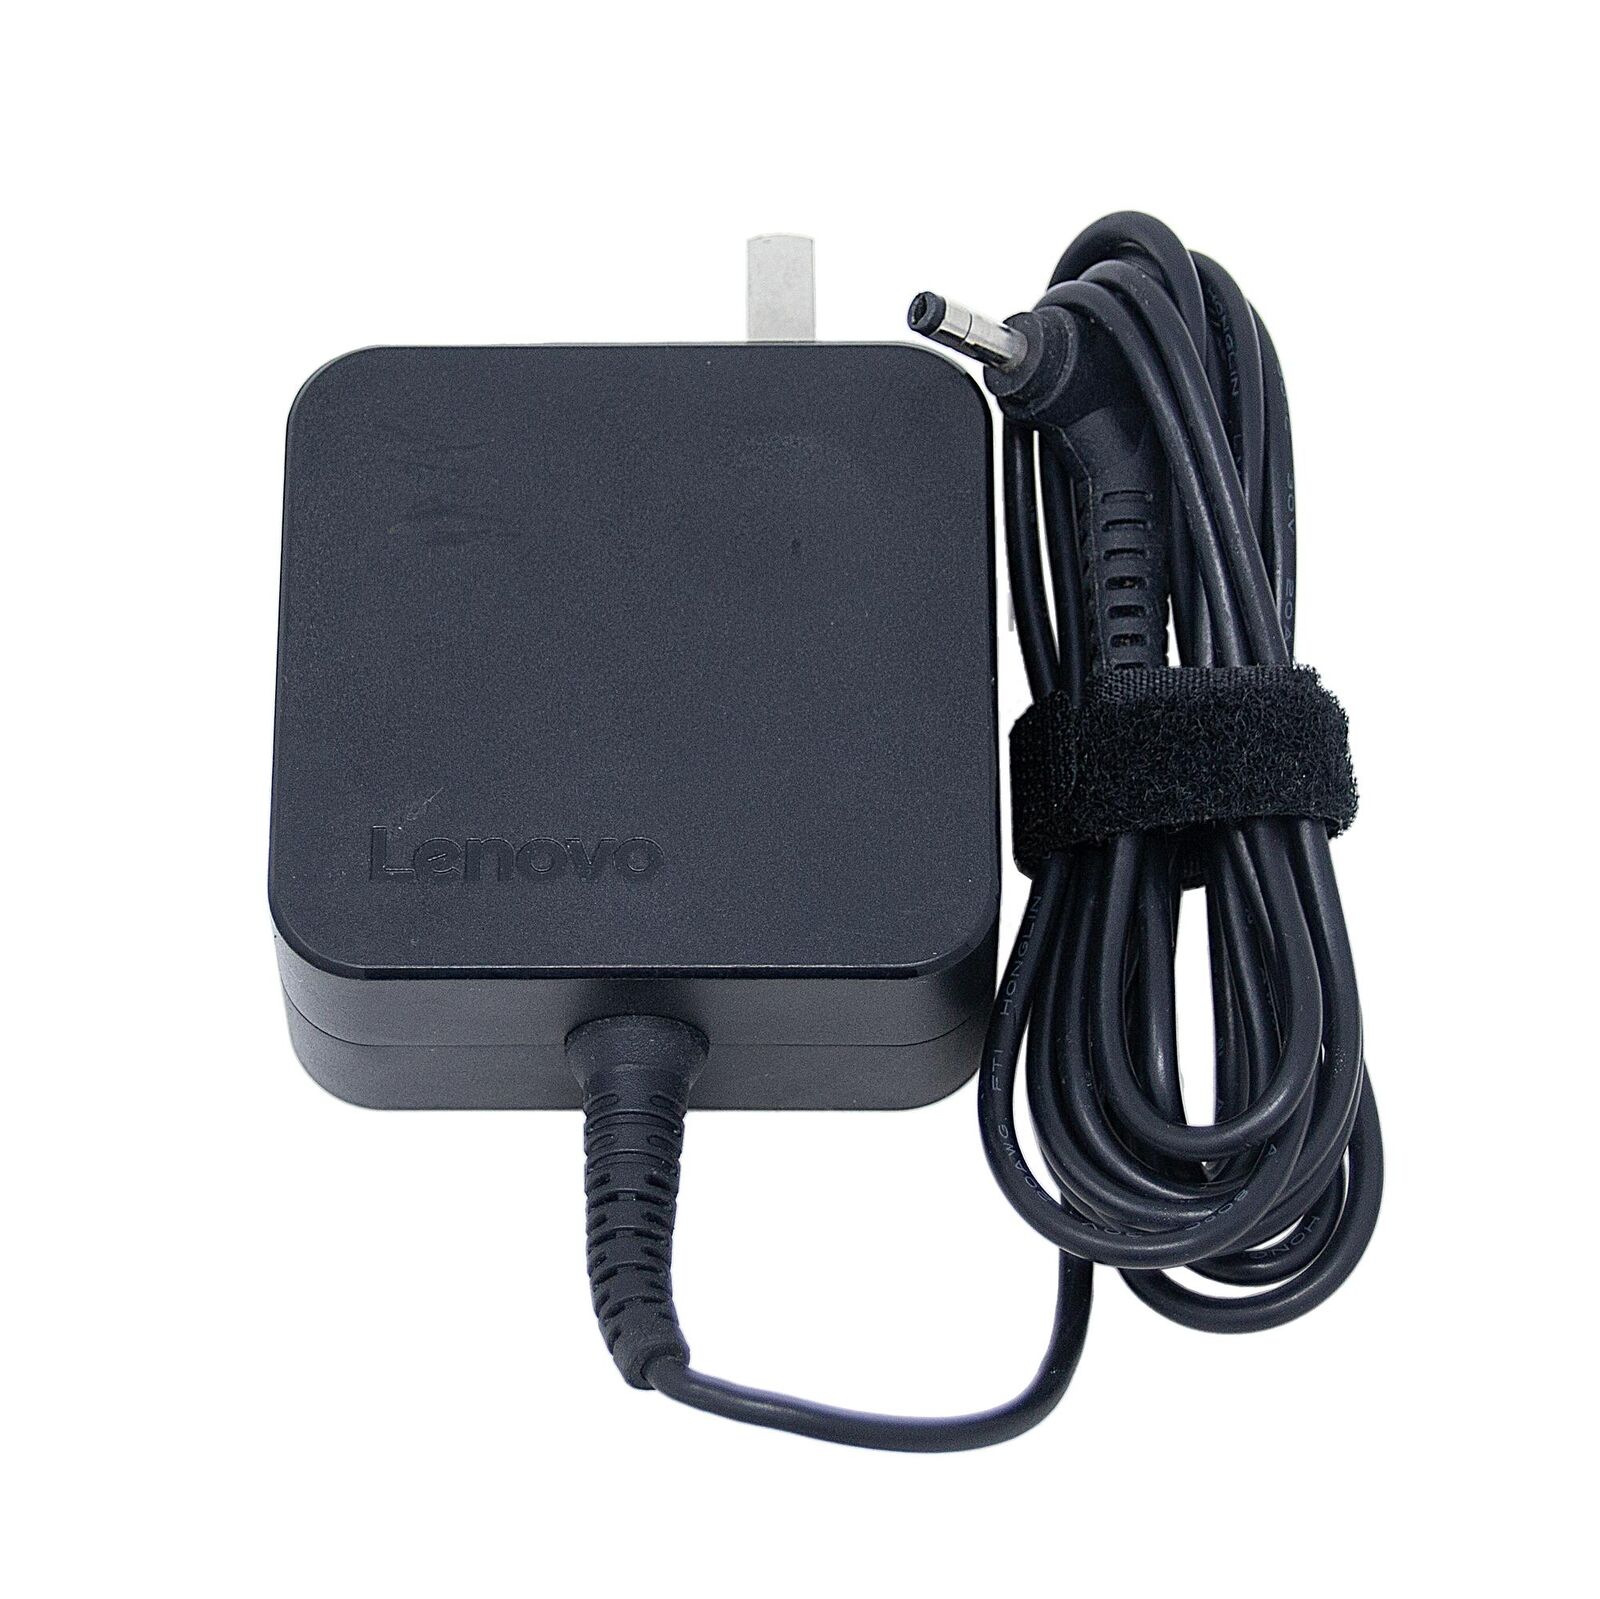 LENOVO IdeaPad Yoga 710-15ISK 80U0 Genuine Original AC Power Adapter Charger